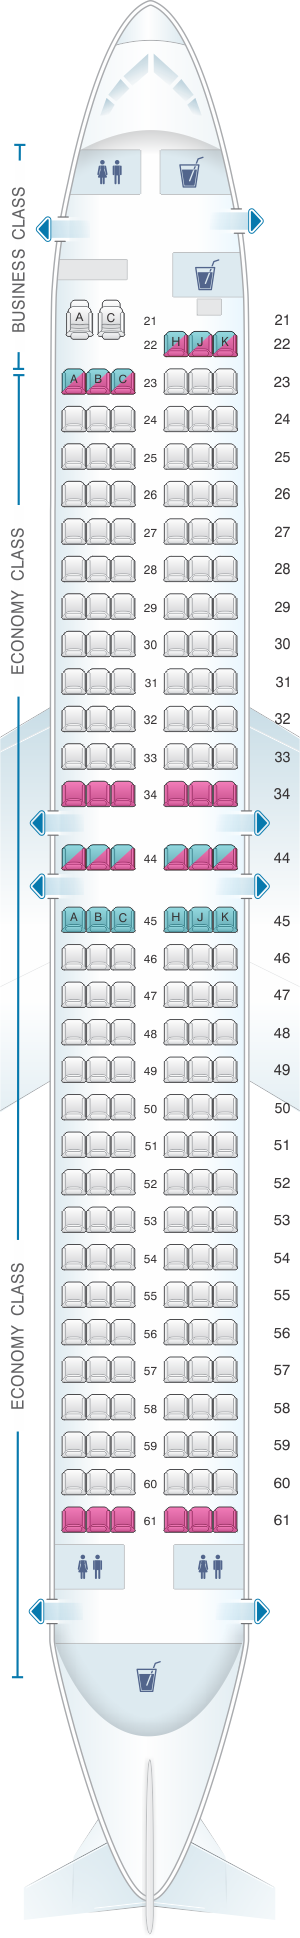 Seat map for El Al Israel Airlines Boeing B737 800 185pax